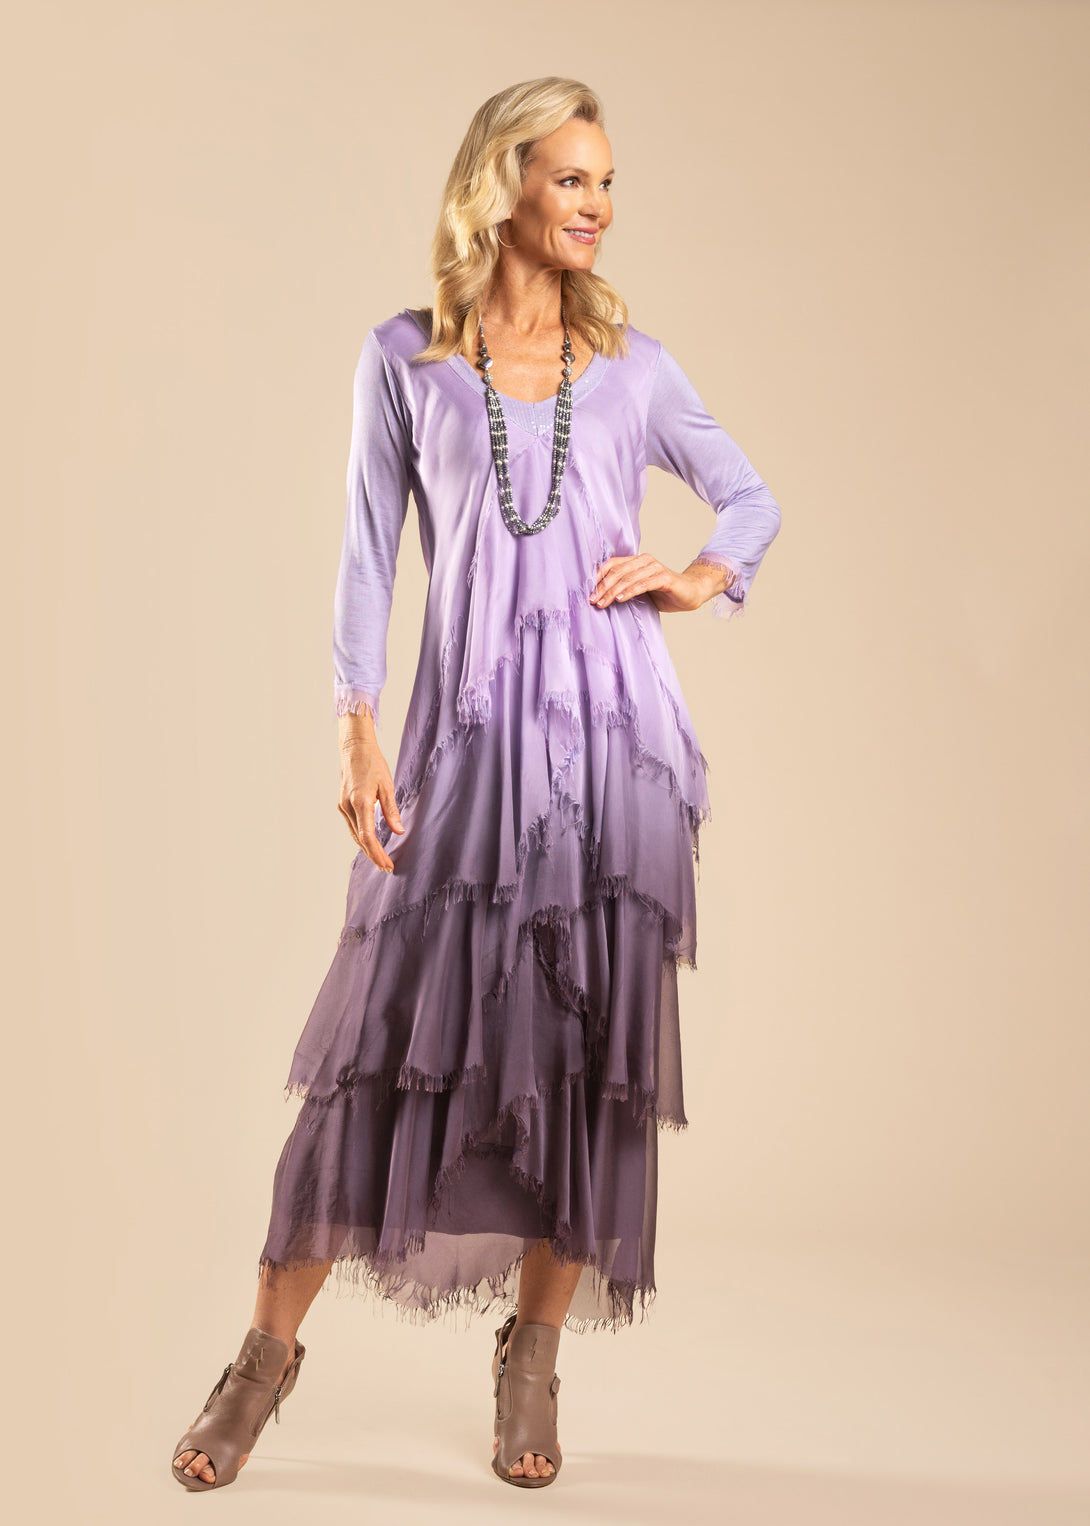 Belin Silk Dress in Wisteria - Imagine Fashion